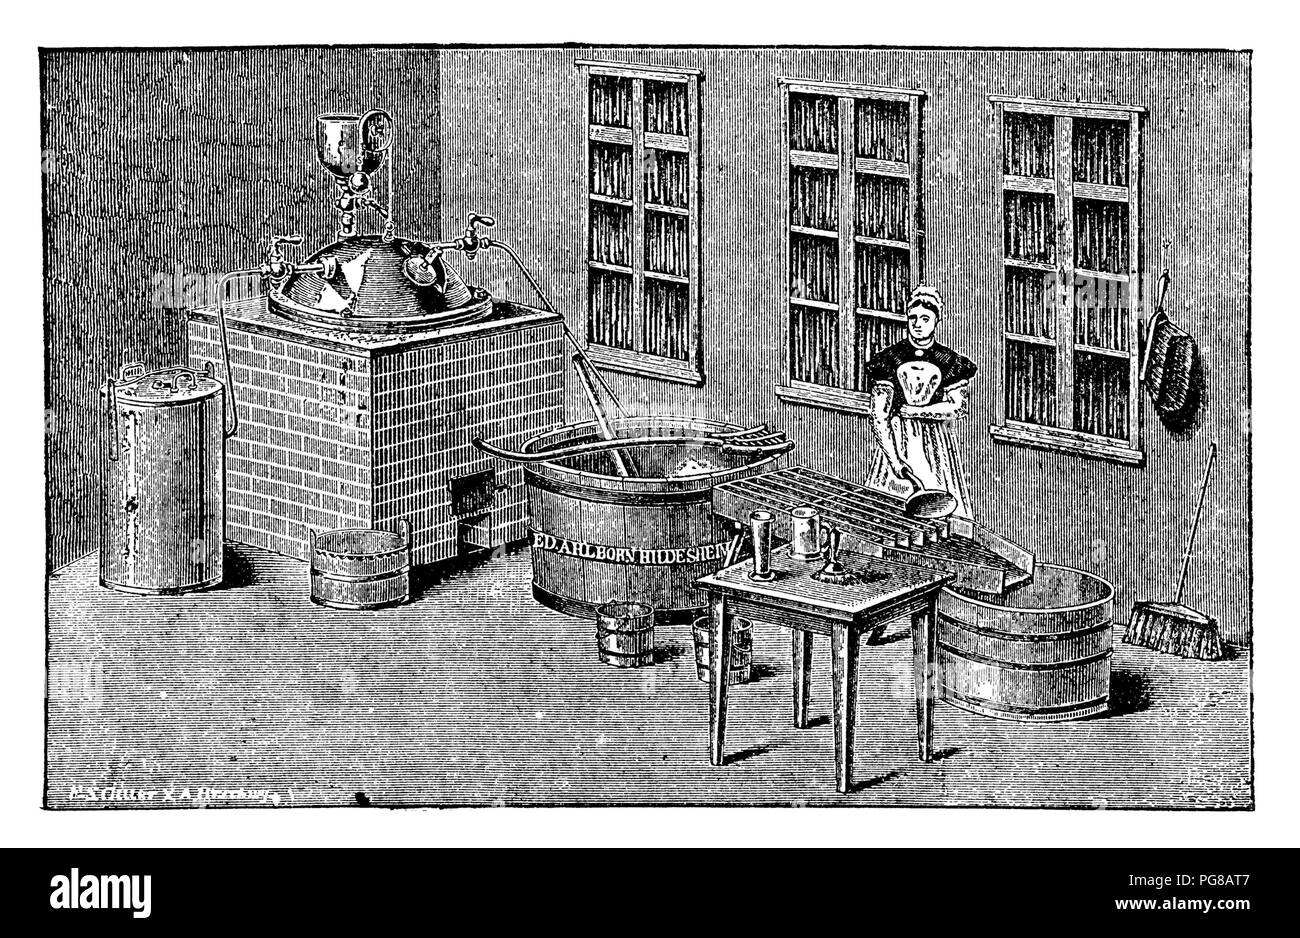 Cheese kitchen for Limburger cheese, kettle by ED Ahlborn, Hildesheim, F. Schiller X.A.  1889 Stock Photo